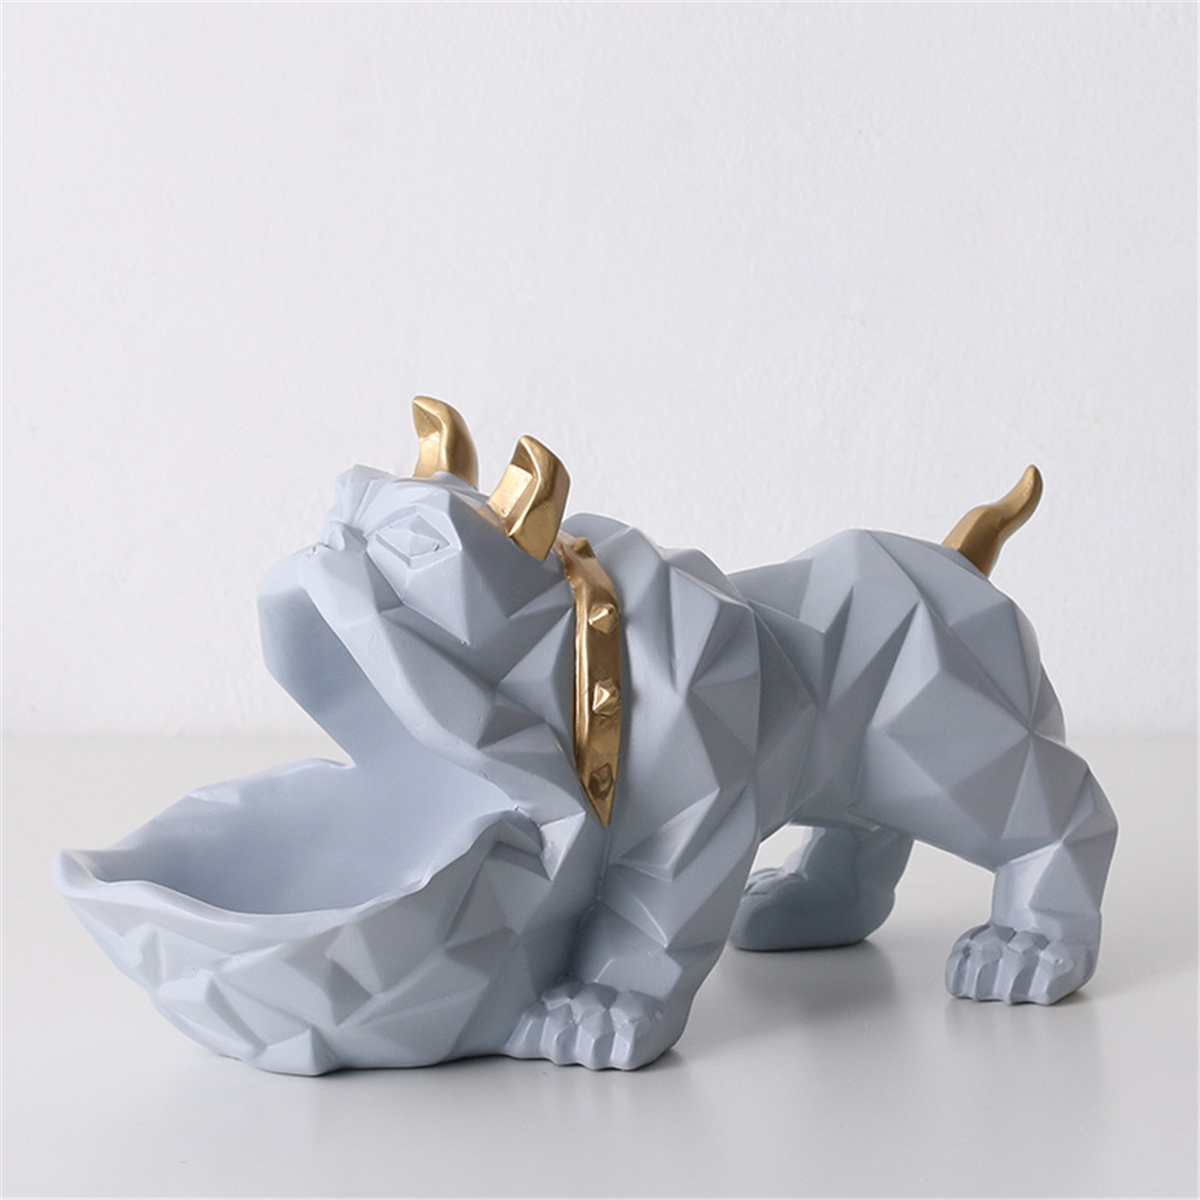 Bulldog-Animal-Sculpture-Puppy-Dog-Statue-Figure-Ornament-Gift-Decorations-1464229-6